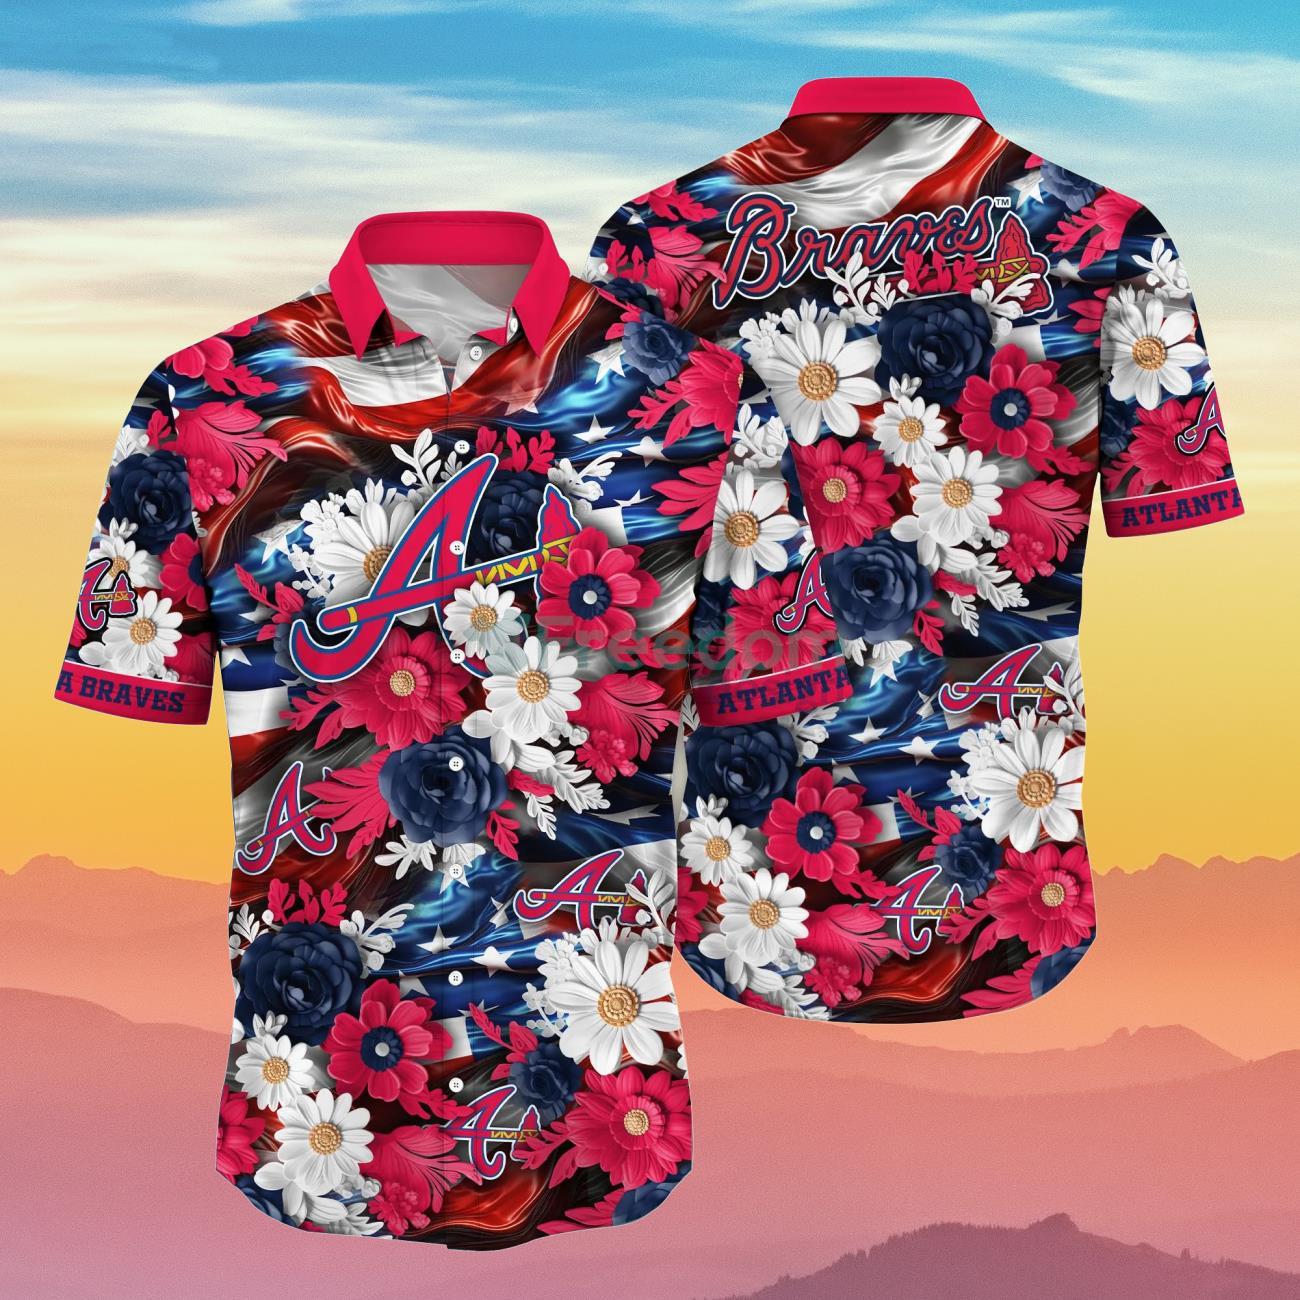 Boston Red Sox MLB Flower Hawaiian Shirt Summer Football Gift For Real Fans  - Freedomdesign